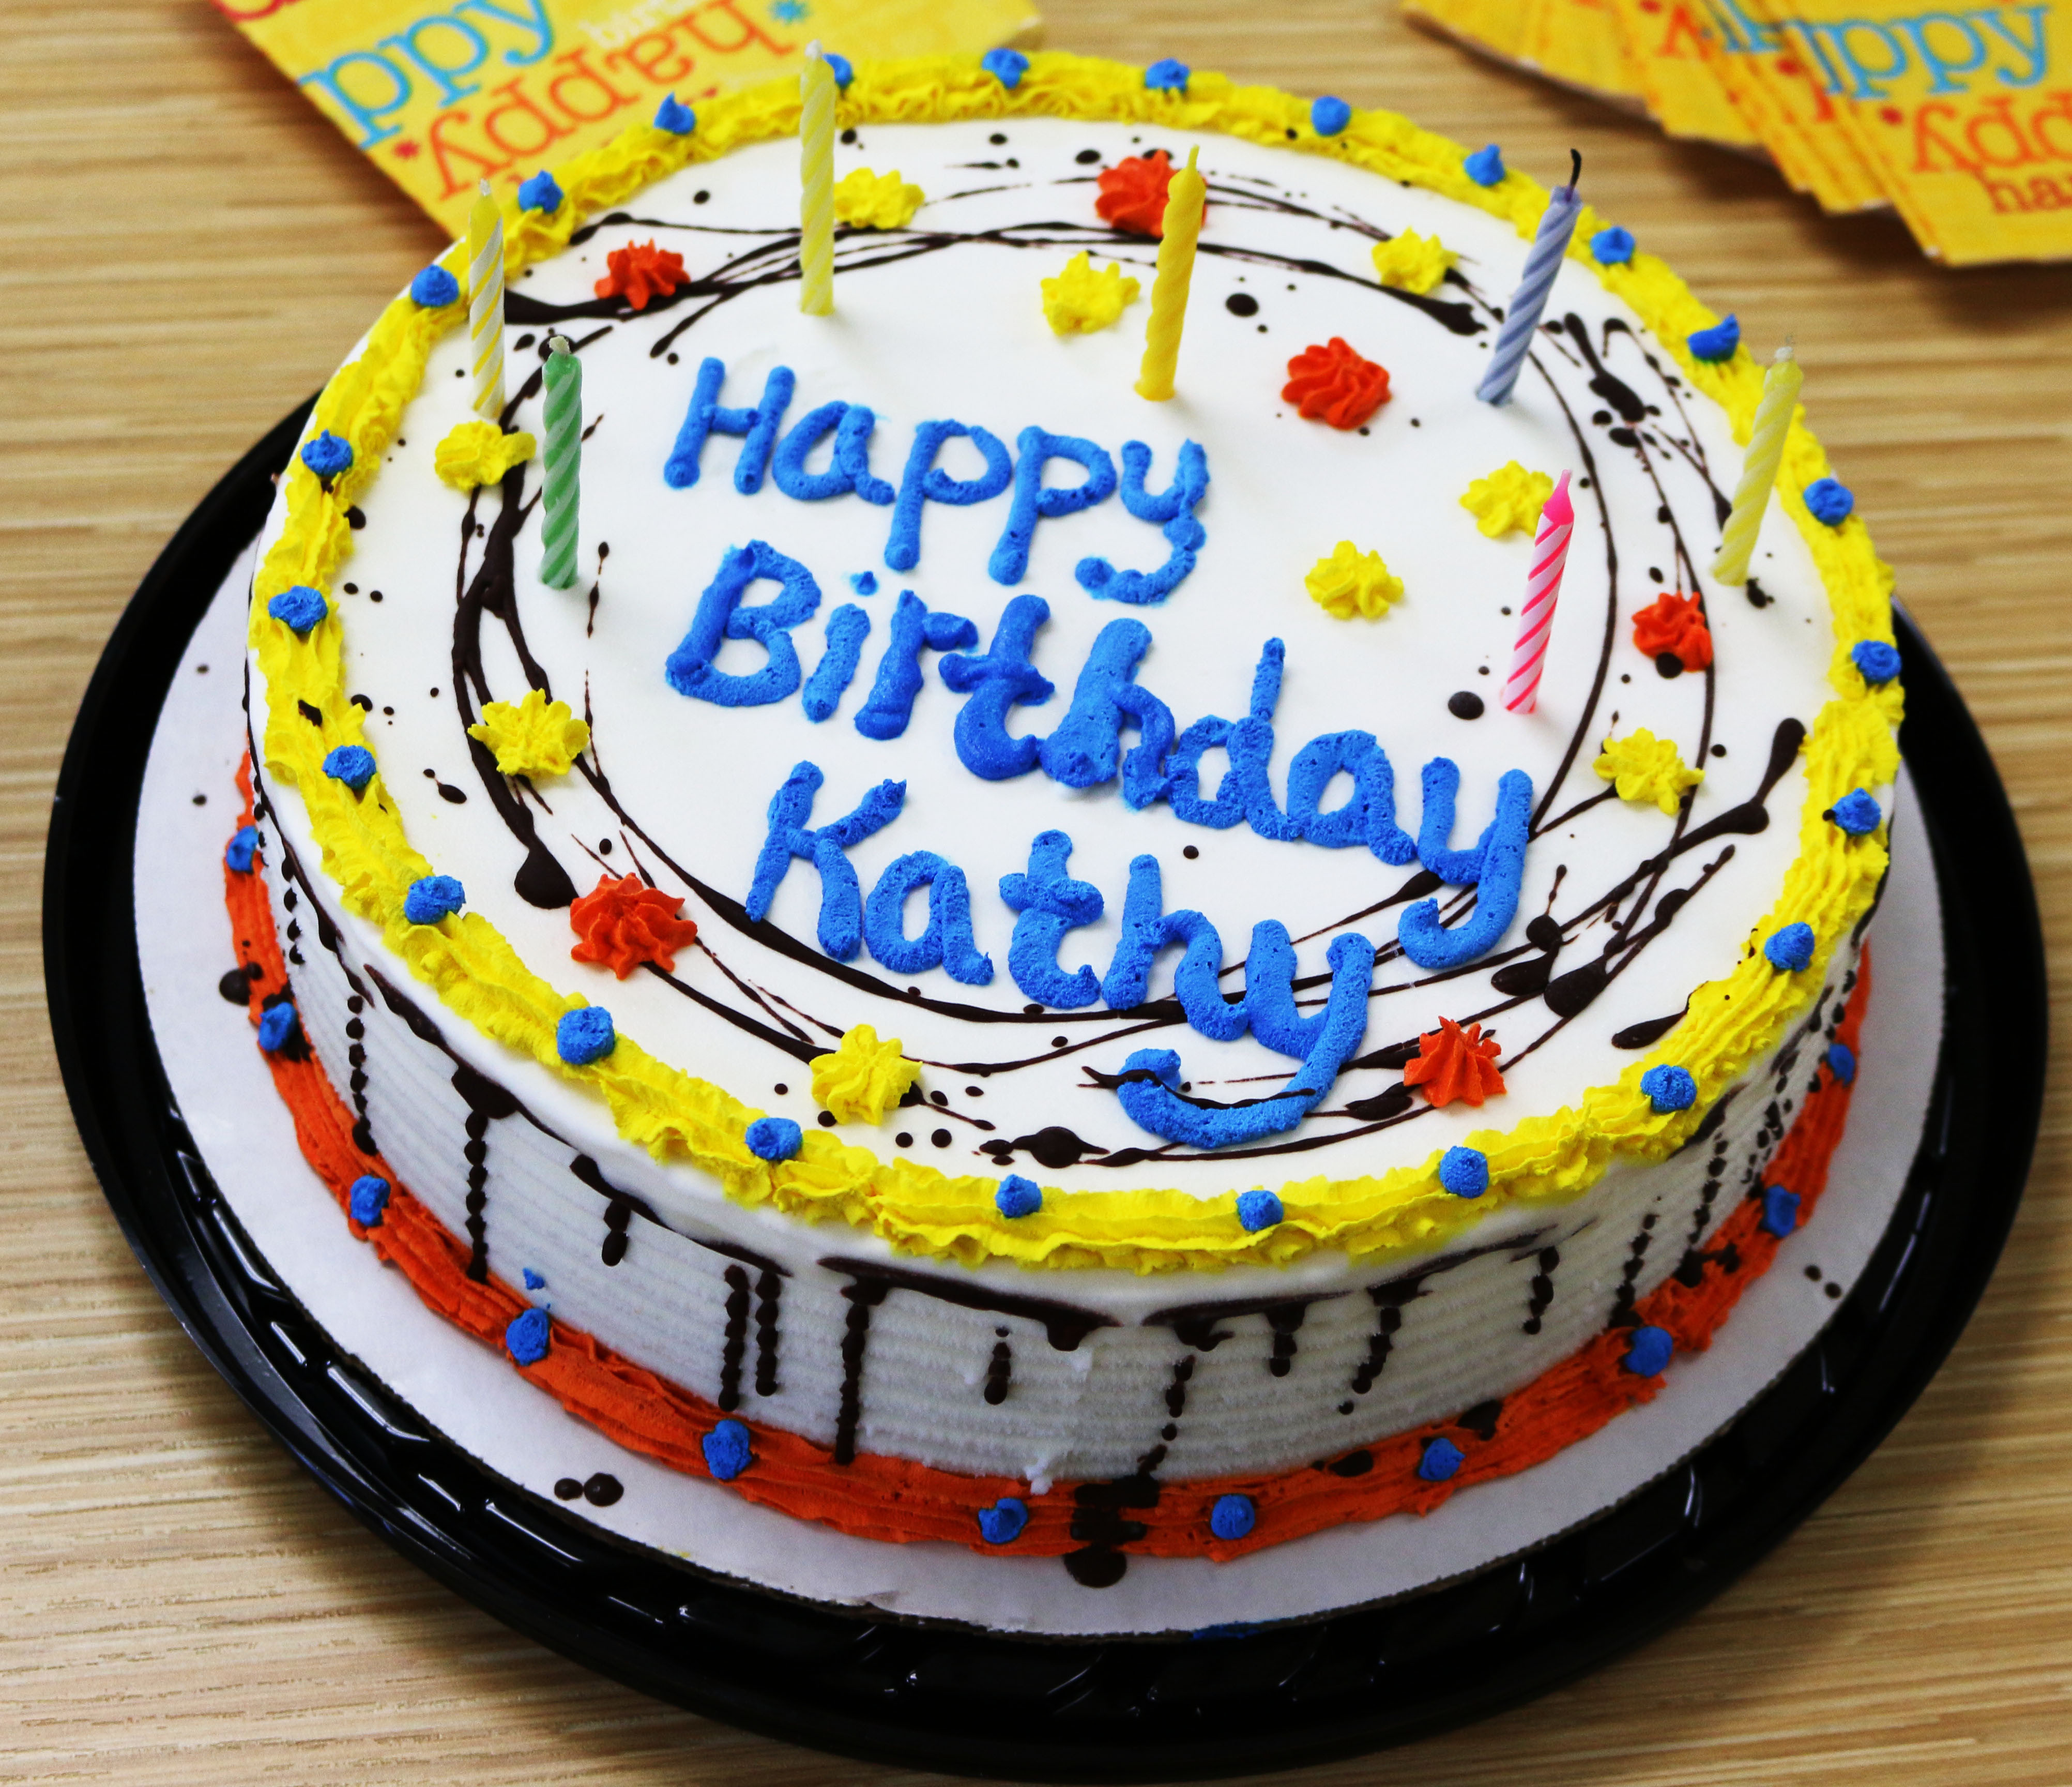 Best ideas about Happy Birthday Kathy Cake
. Save or Pin Happy Birthday Kathy Now.